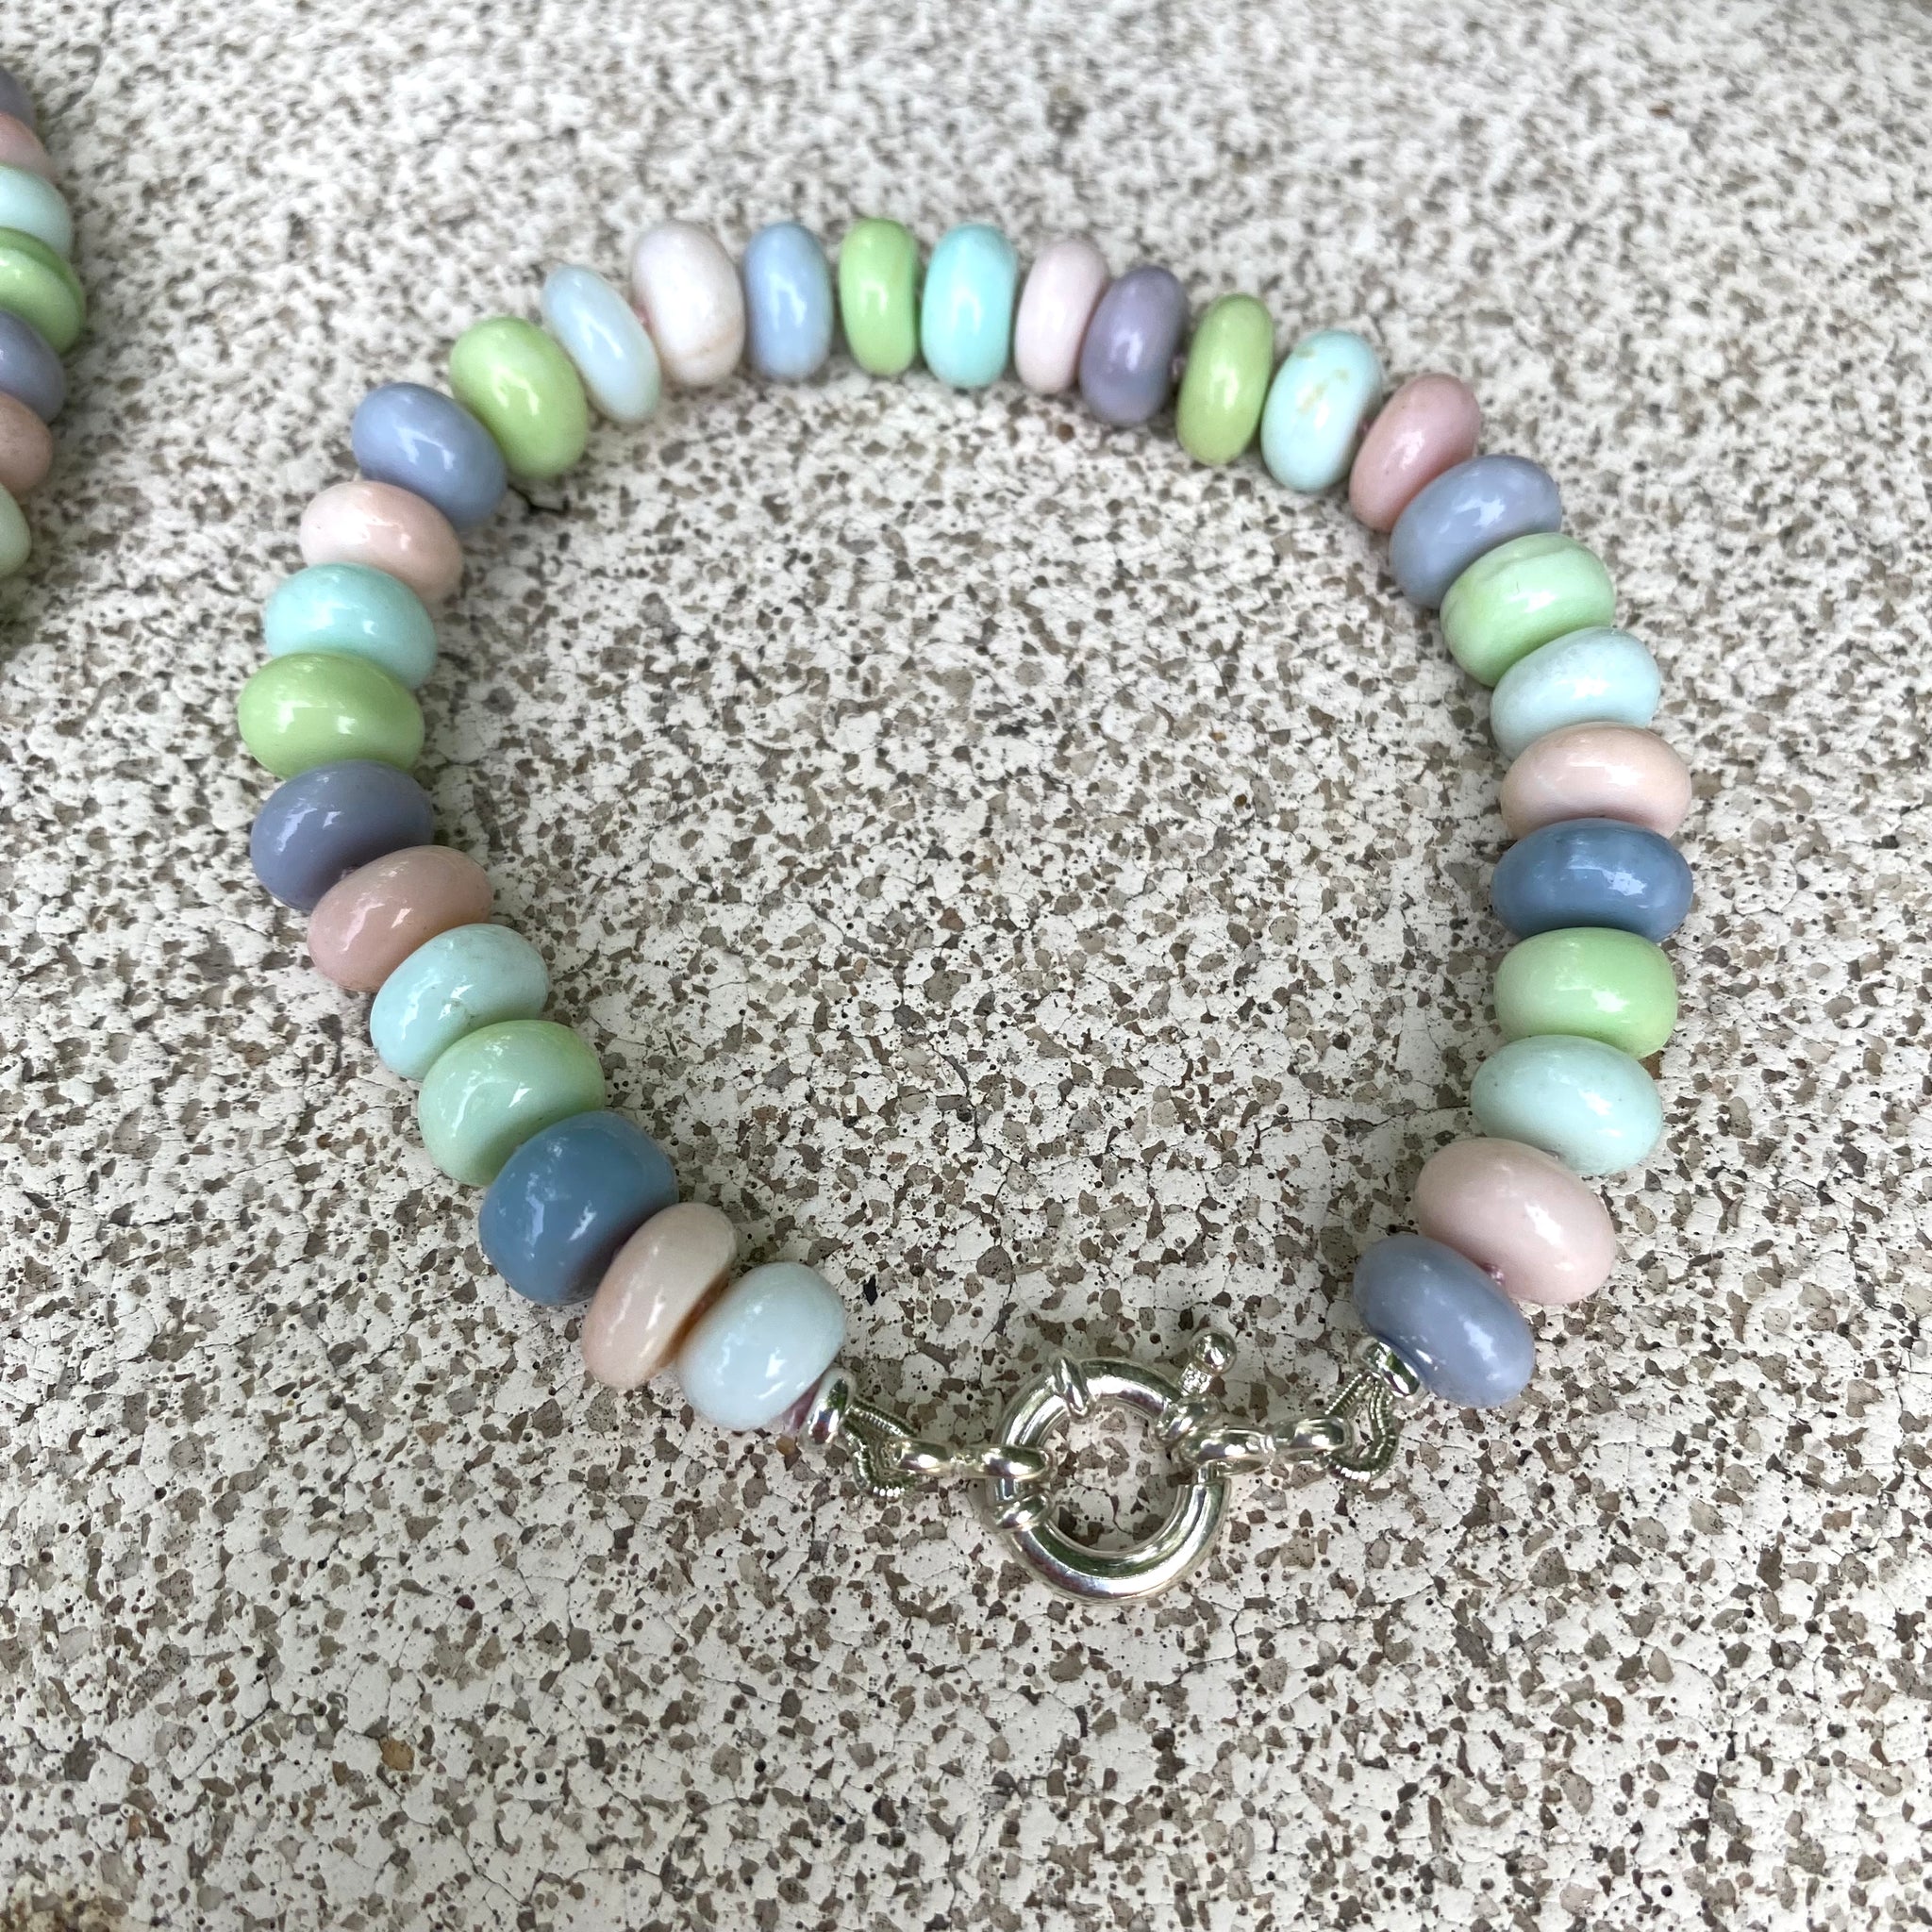 Metallic Candy Bracelets - Multiple Colors